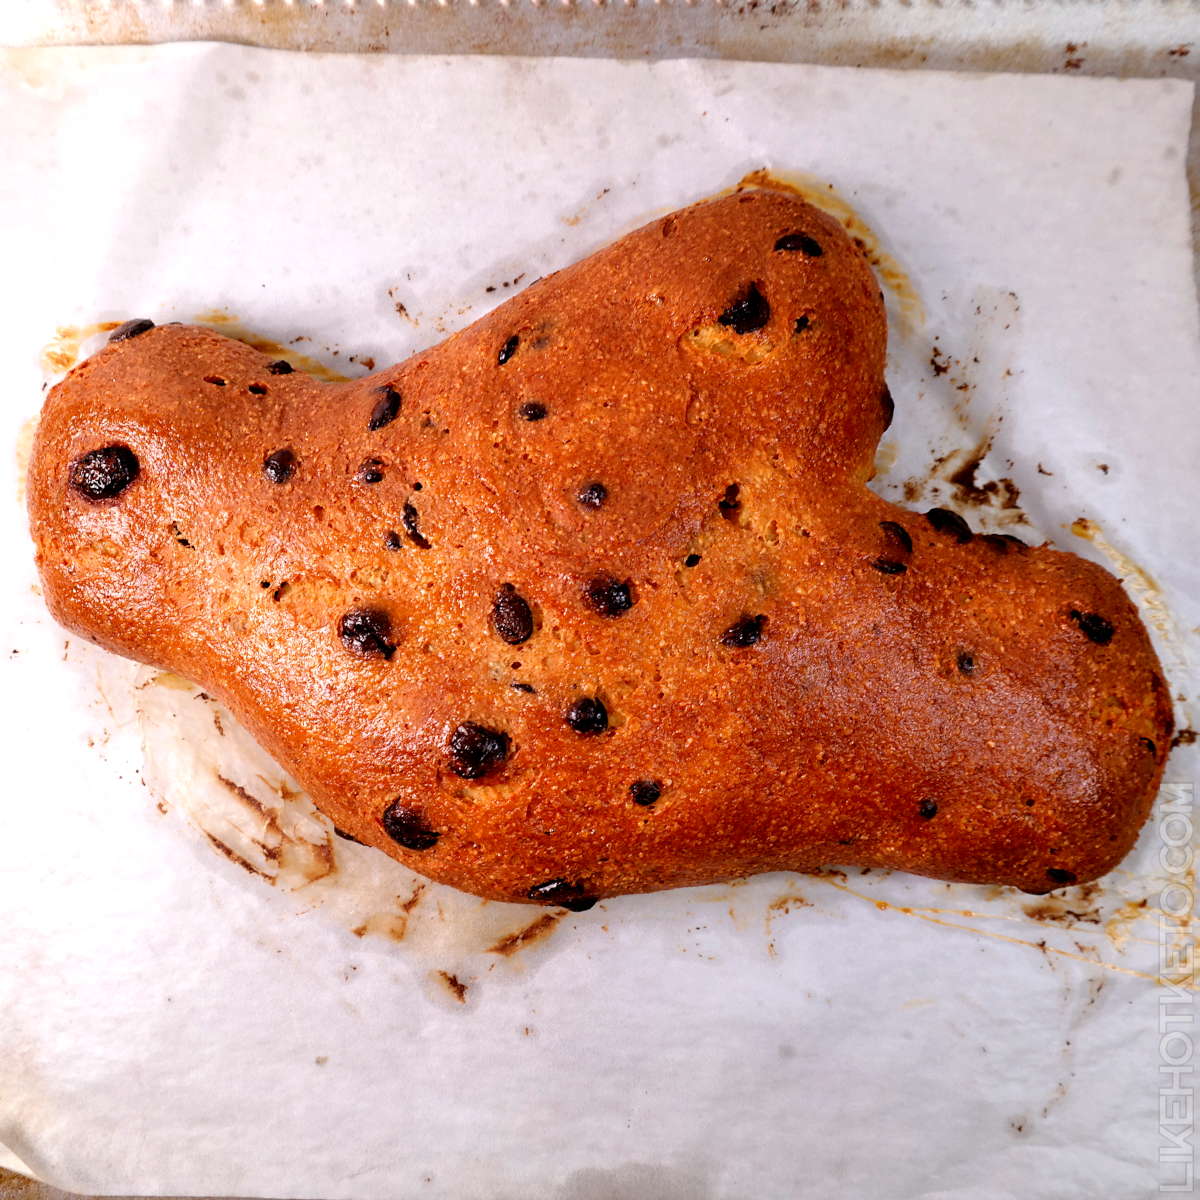 Colomba Italian Easter bread, shaped like a cute dove.